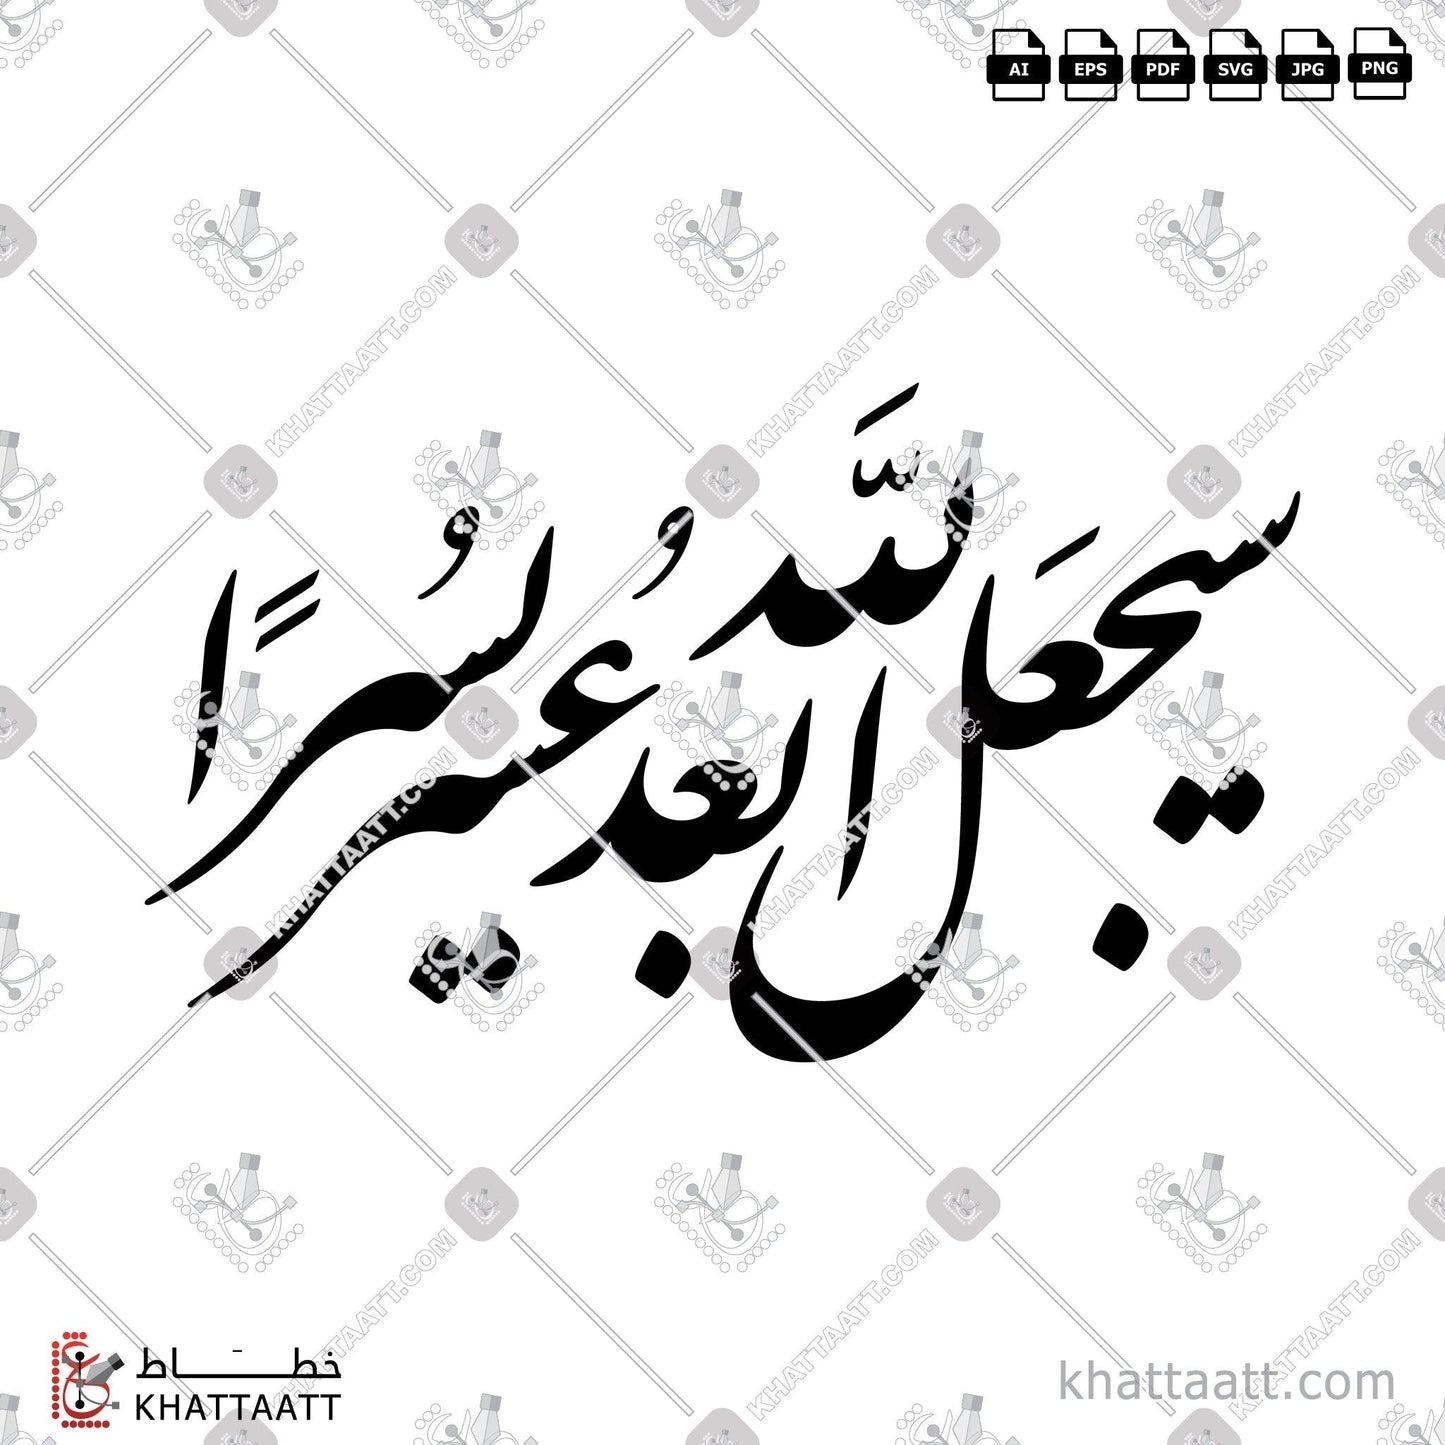 Download Arabic Calligraphy of سيجعل الله بعد عسر يسرا in Farsi - الخط الفارسي in vector and .png